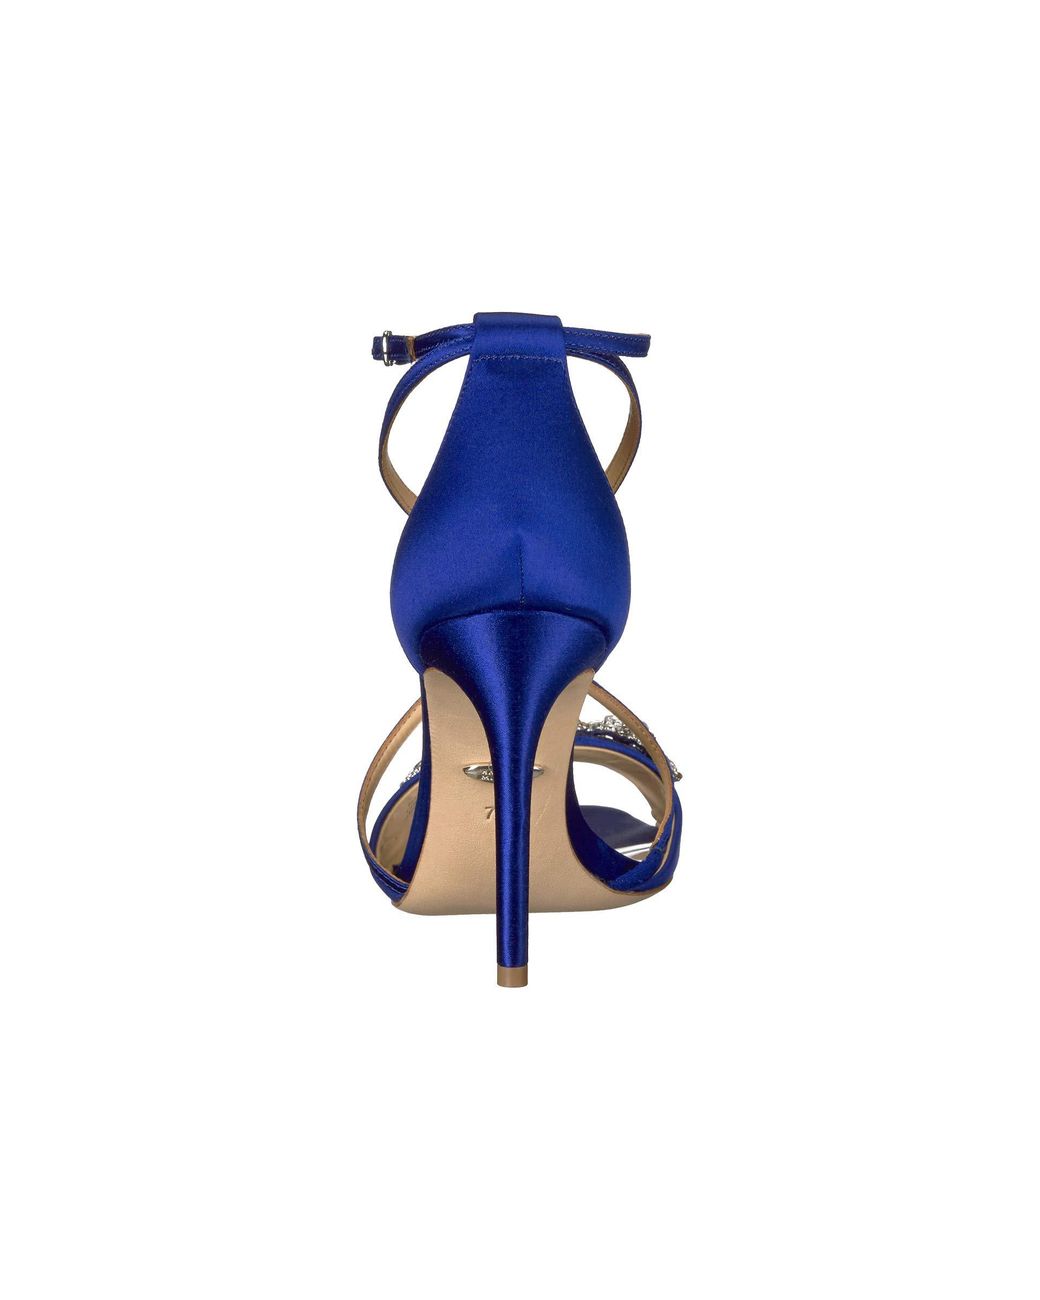 Mesh Indeed Cobalt Blue Mesh Peep Toe Heels | Mesh peep toe heels, Heels,  Fashion shoes